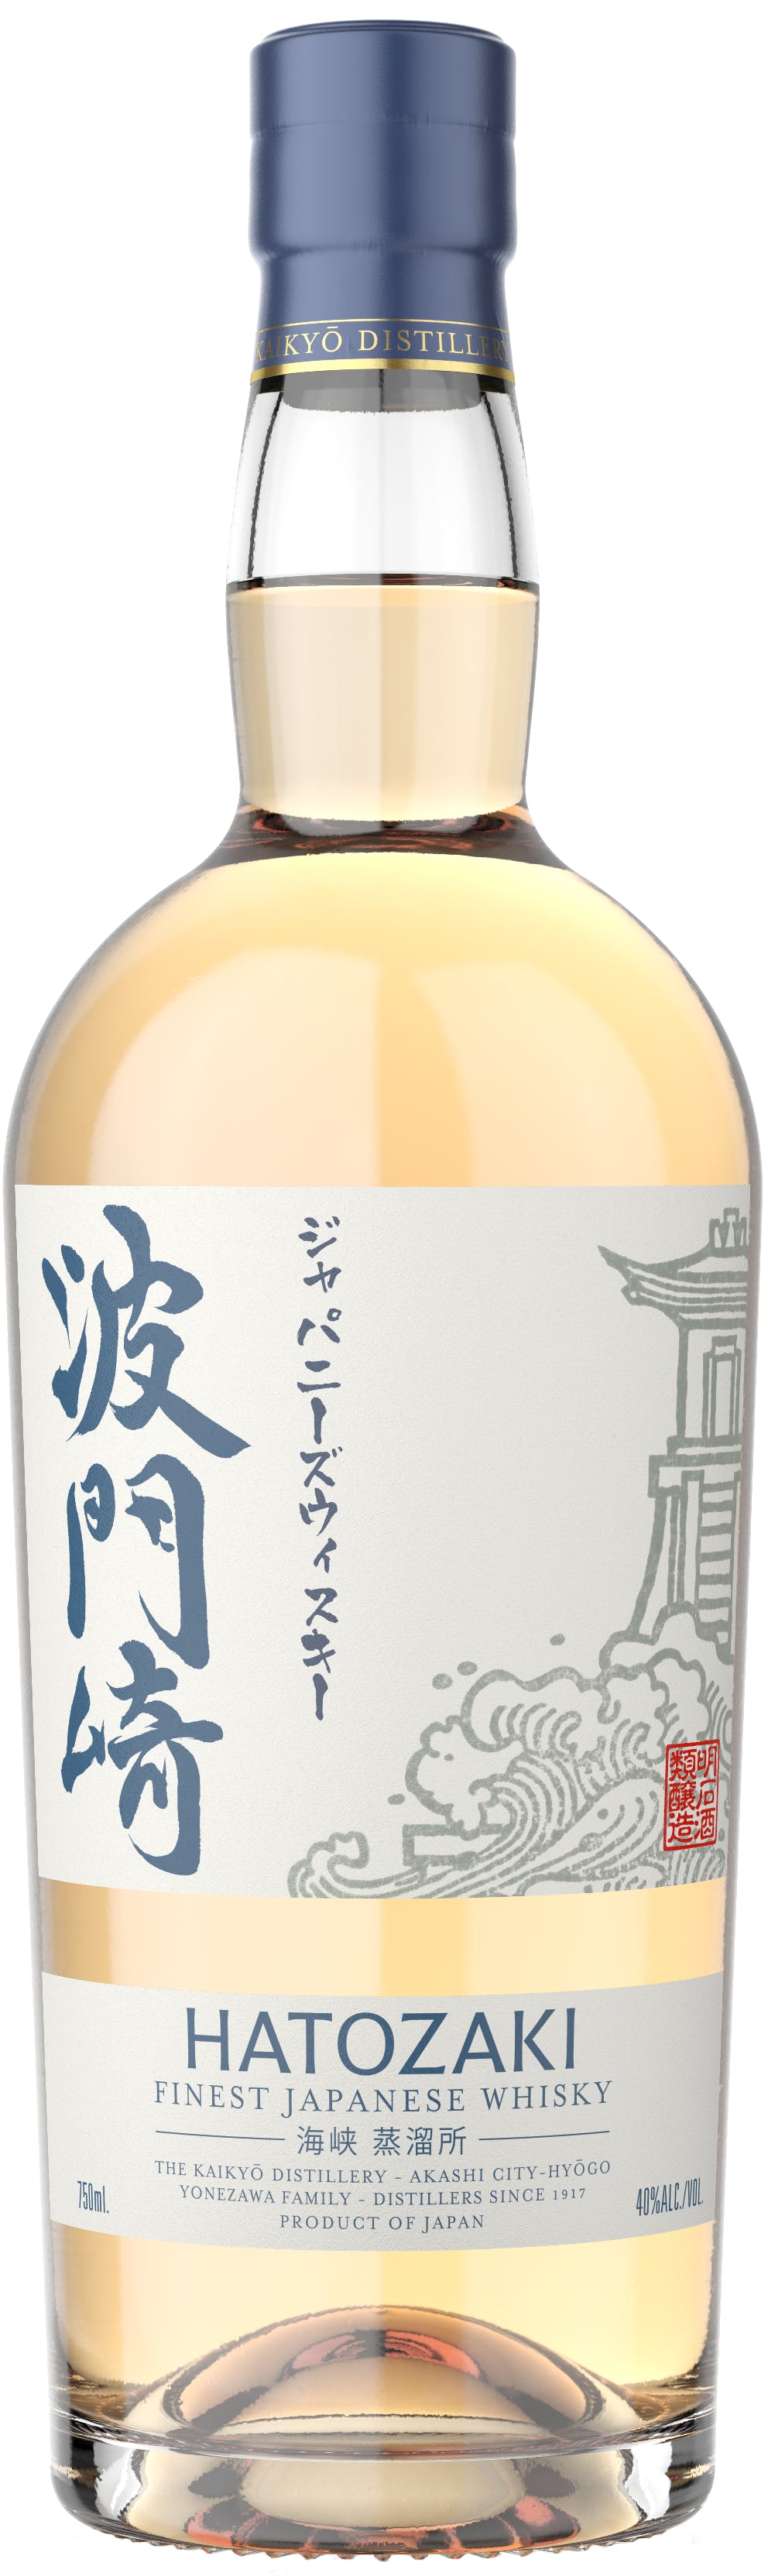 Hatozaki Liquor Argonaut - Japanese 750ml & Wine Finest Whisky